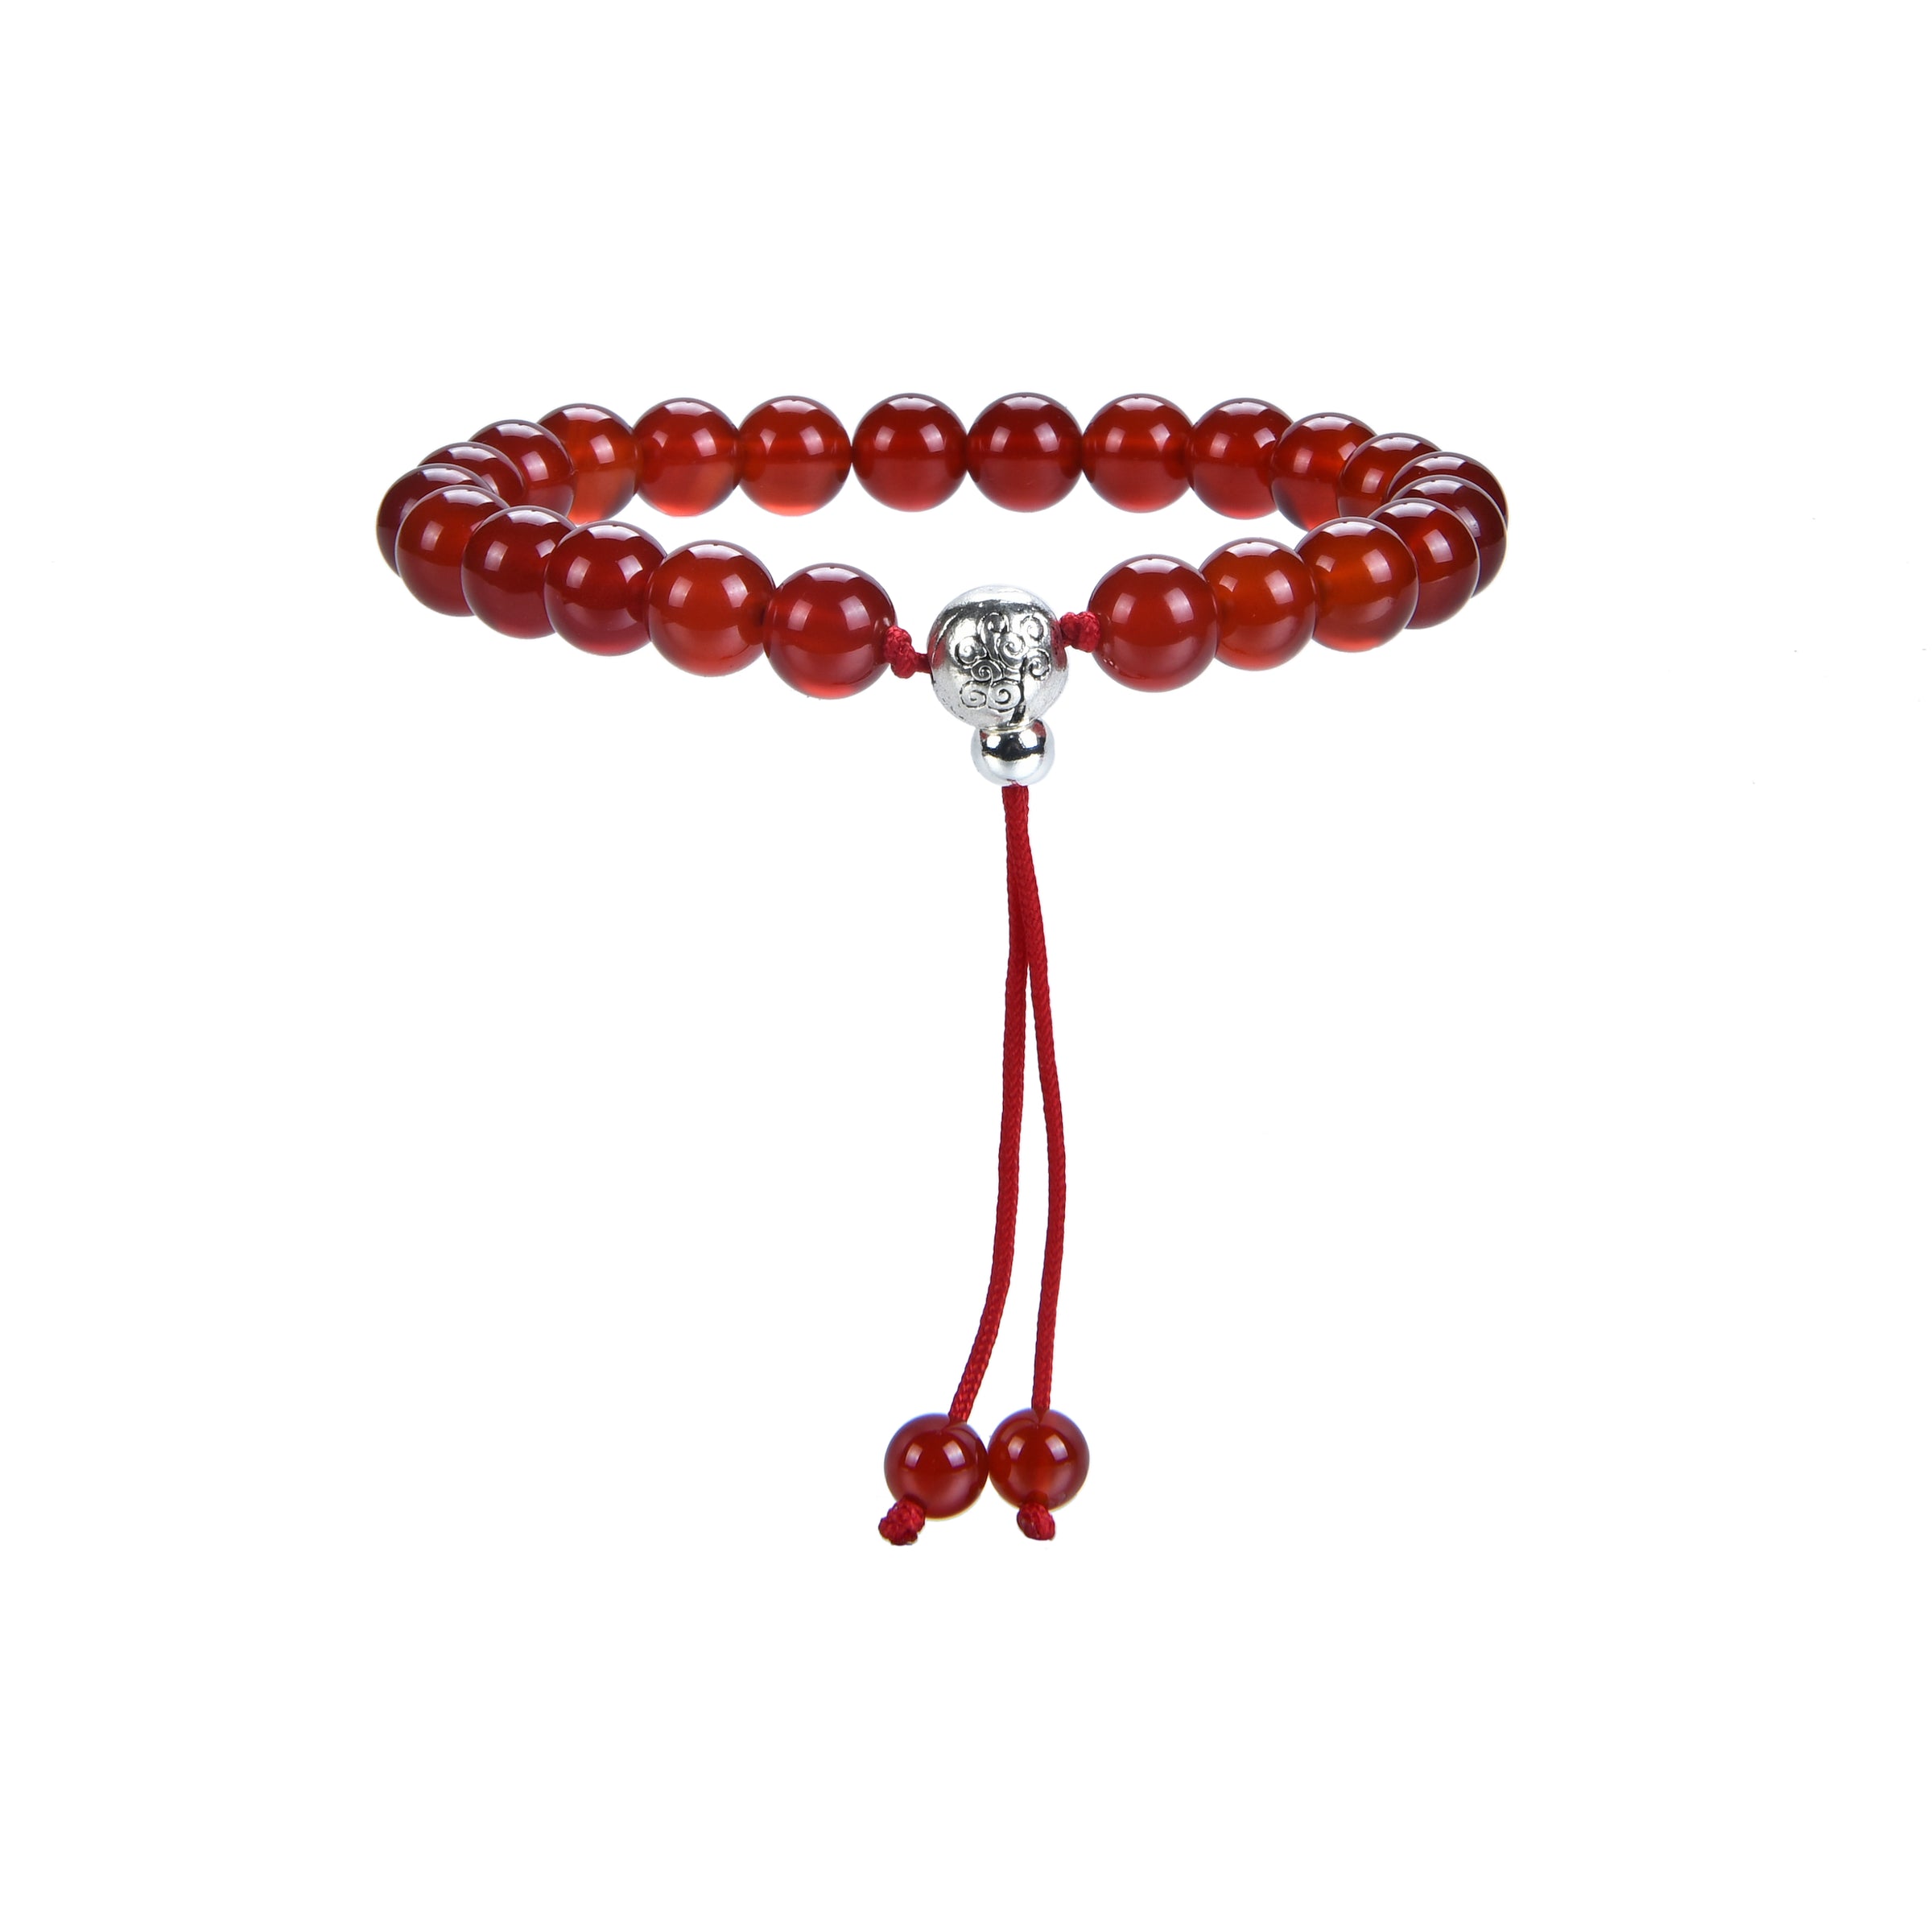 Mala Bracelet | 8mm Beads, Guru Bead, Durable Nylon Cord | Adjustable Length (Deep Orange - Red Agate )